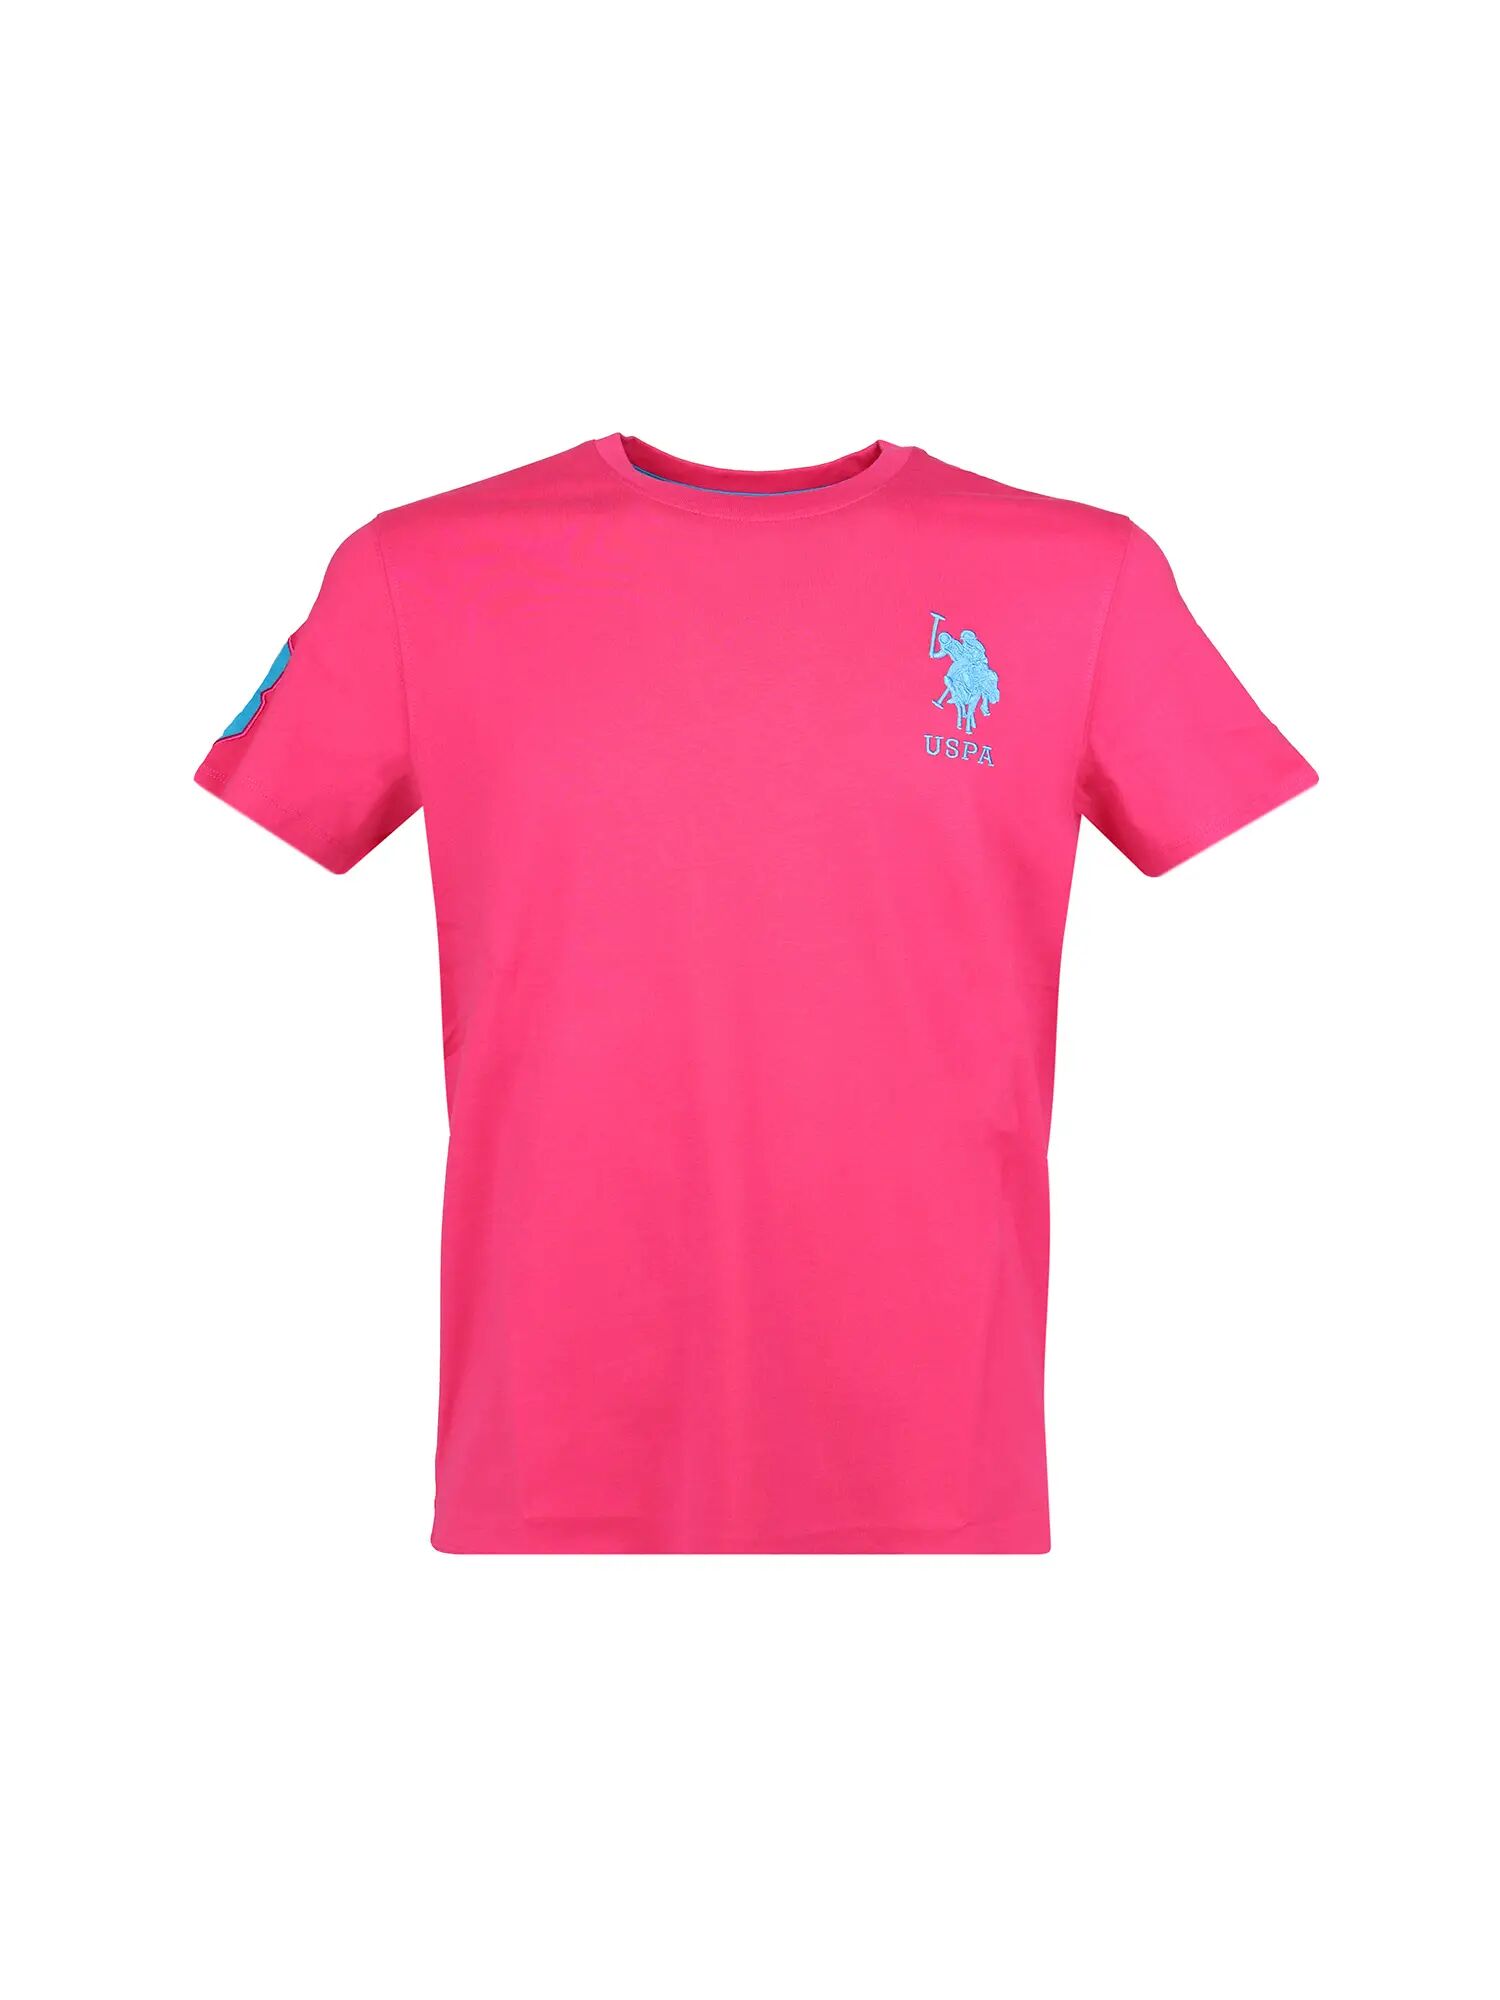 Us Polo Assn. T-shirt Uomo Colore Fuxia FUXIA S